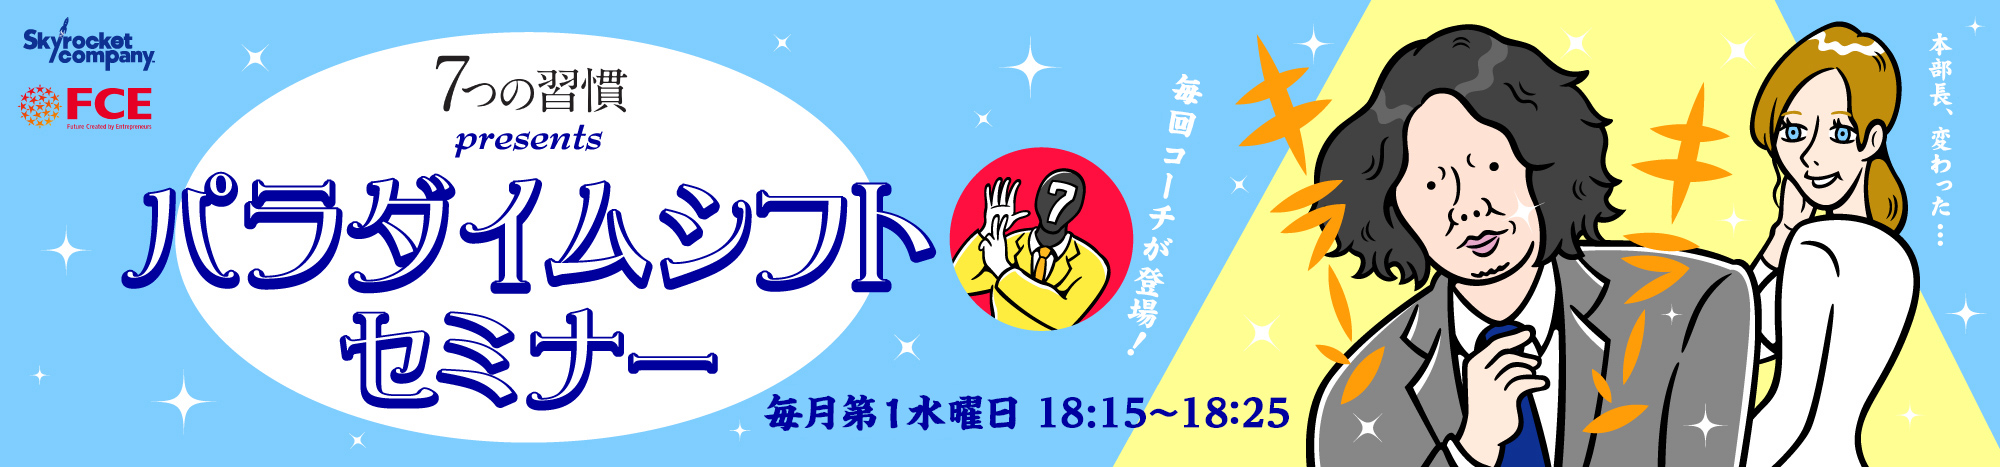 Skyrocket company『７つの習慣』 presents パラダイムシフト・セミナー 毎週水曜日 18:40〜18:50